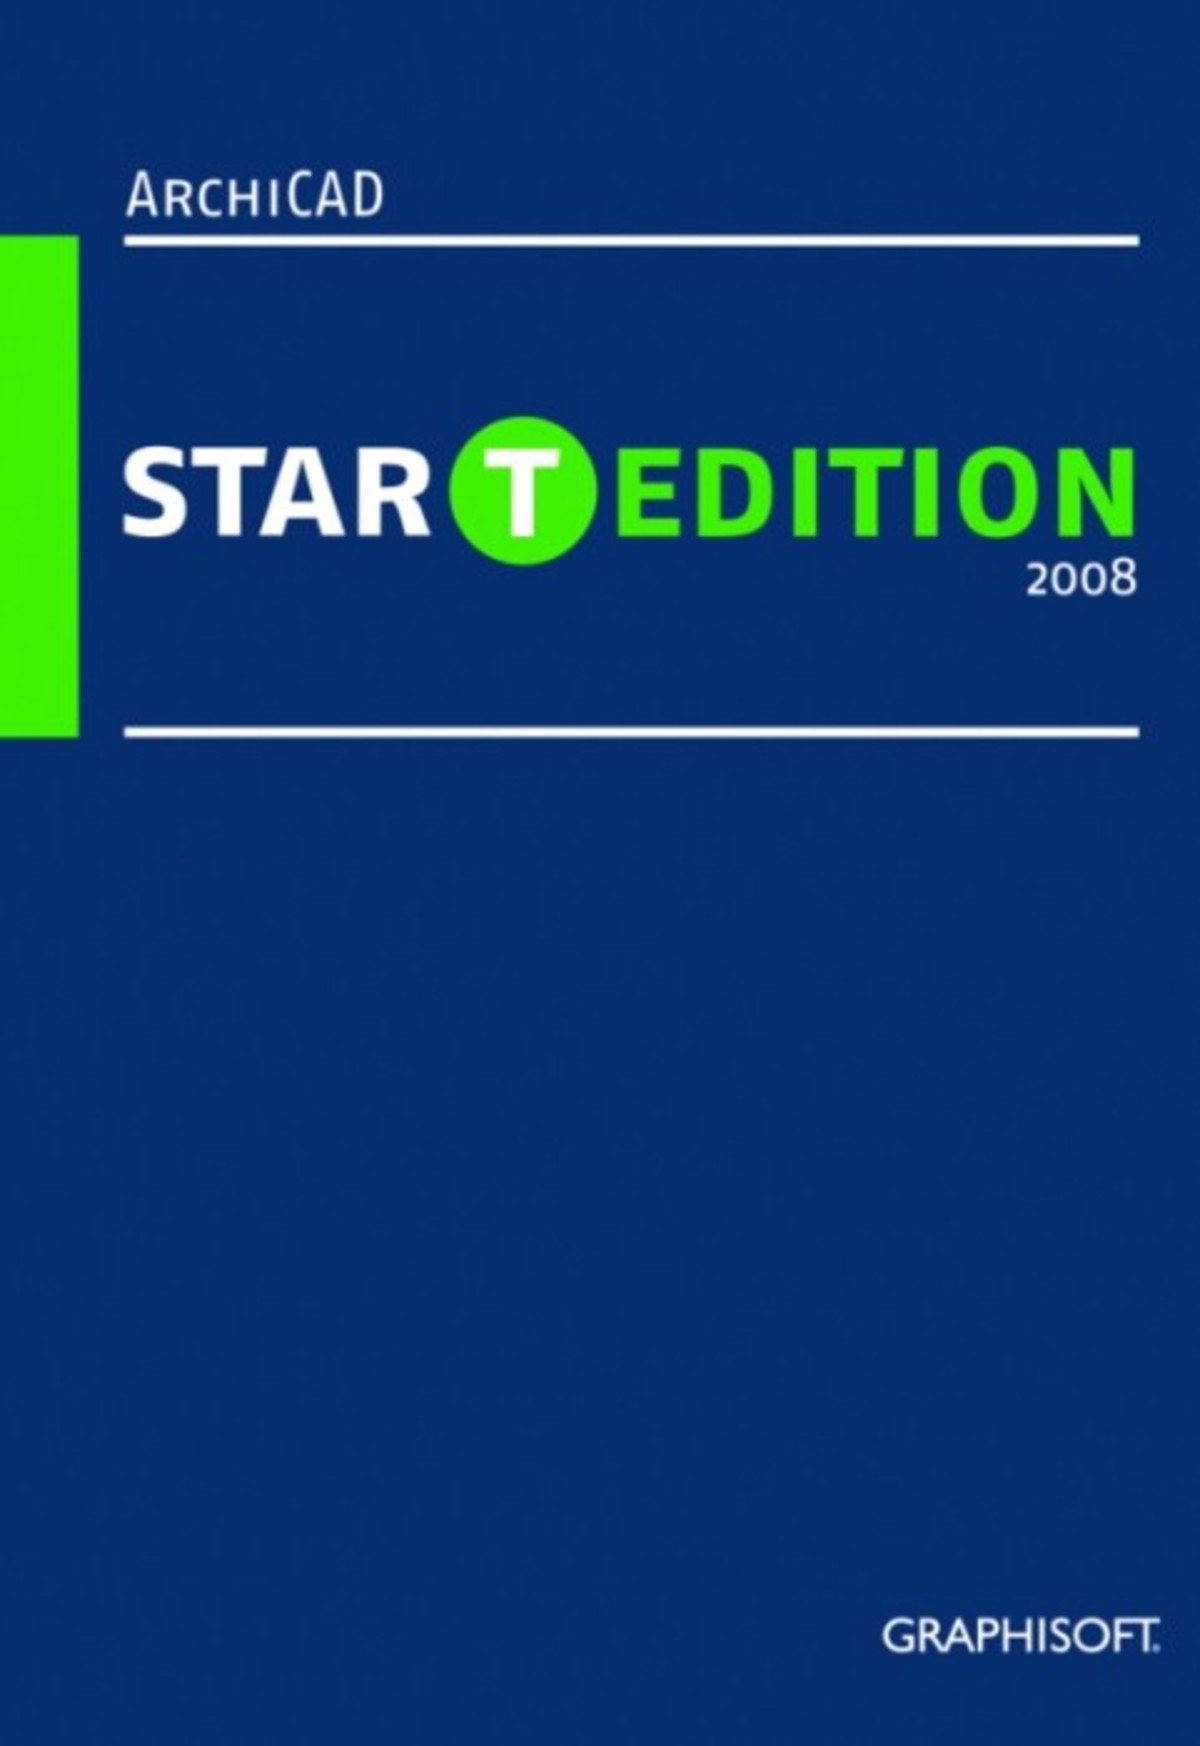 ArchiCAD STAR(T) EDITION